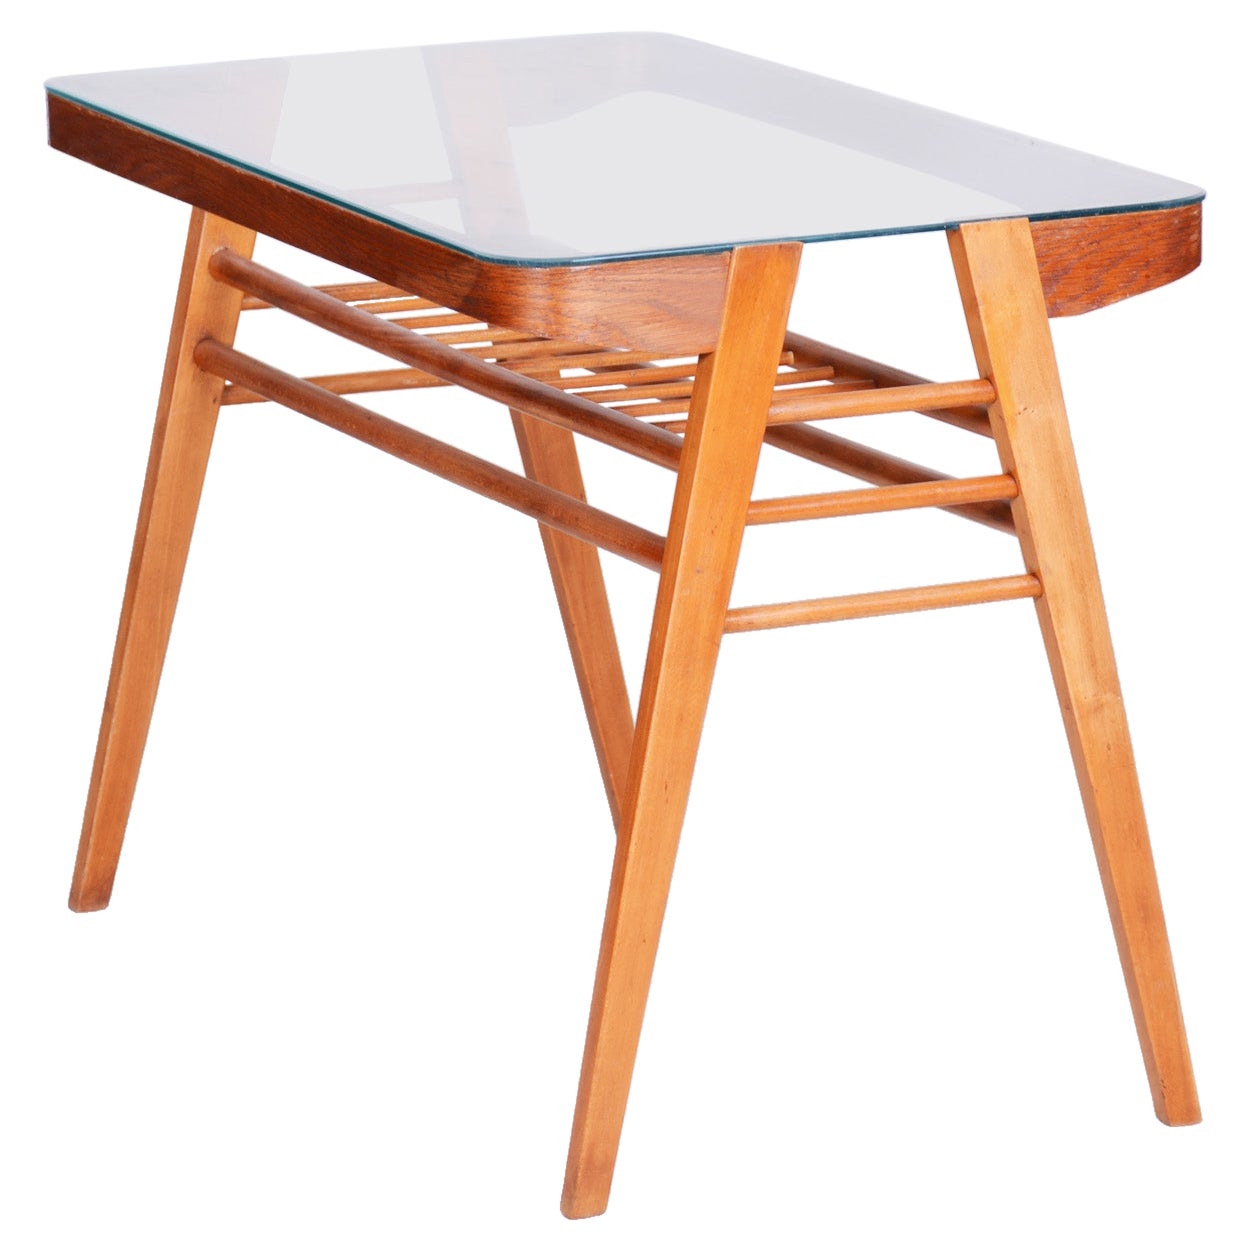 Oak Table, Czech Midcentury, Preserved Original Condition, 1950s